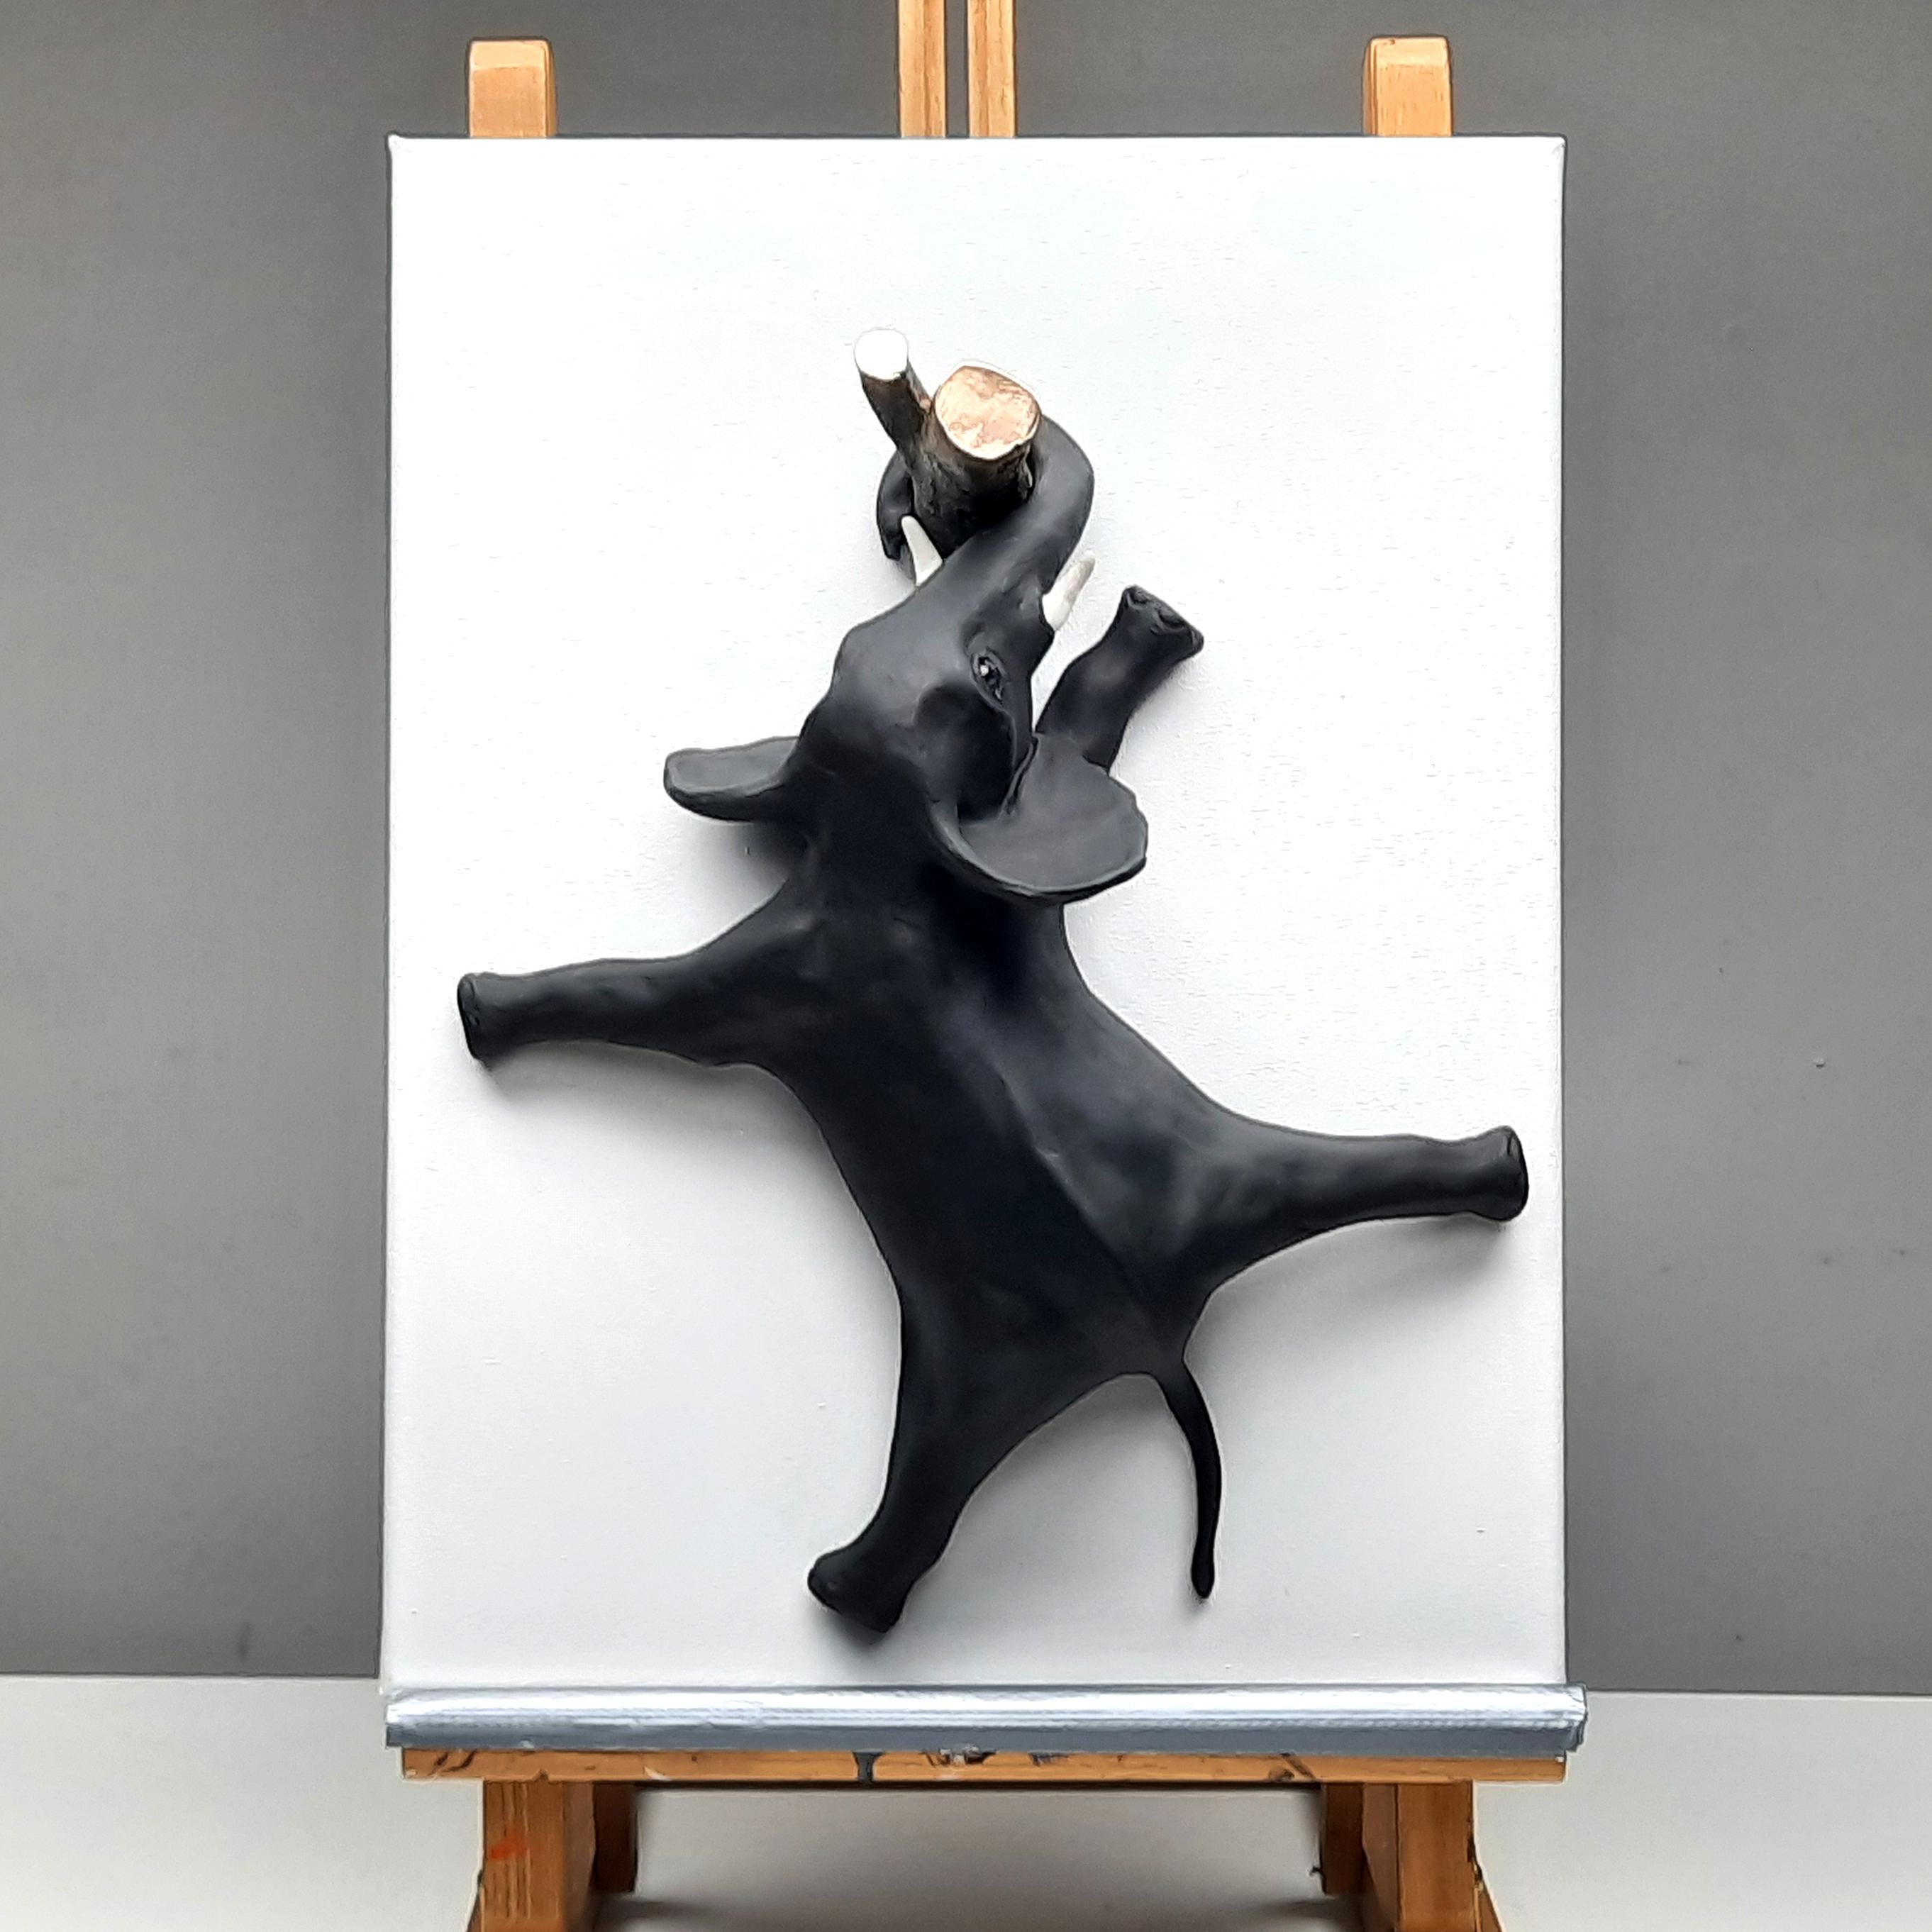 Henk Jan Sanderman Still-Life Sculpture - "Perspective" (White) - realism bronze cast sculpture limited edition modern art